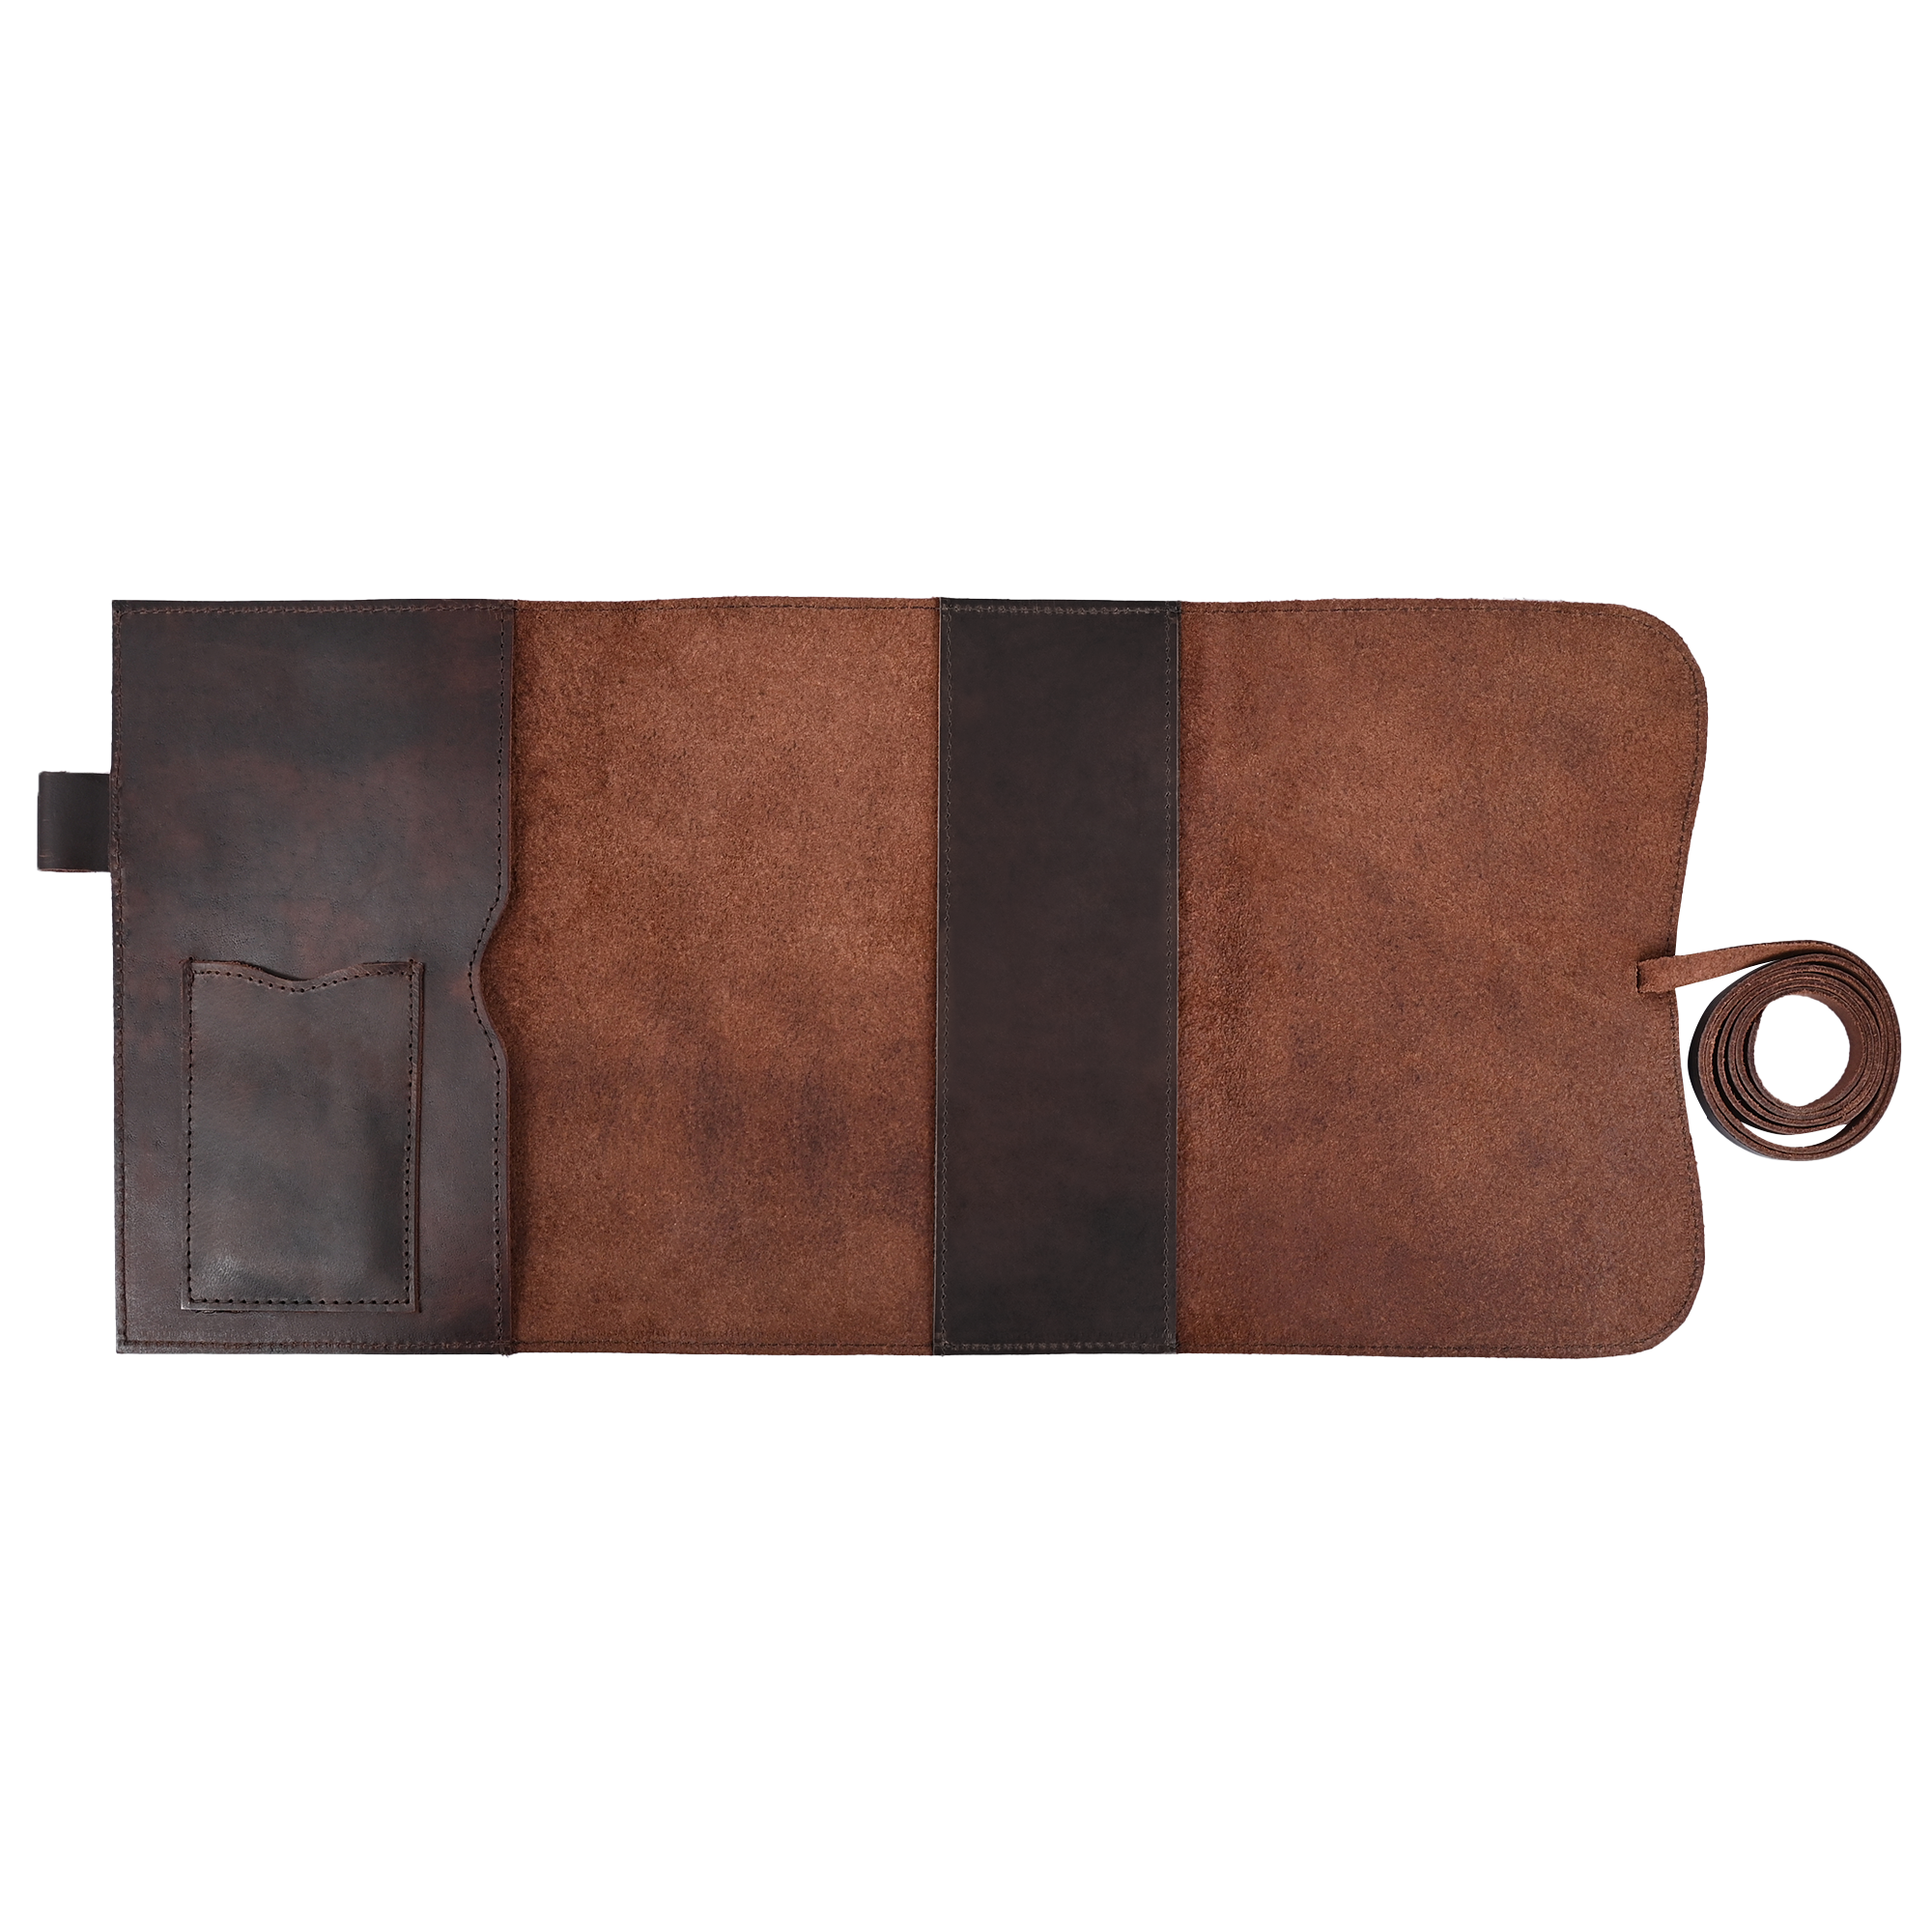 Leather Bible Cover Wrap Around Strap - Teak (Medium)